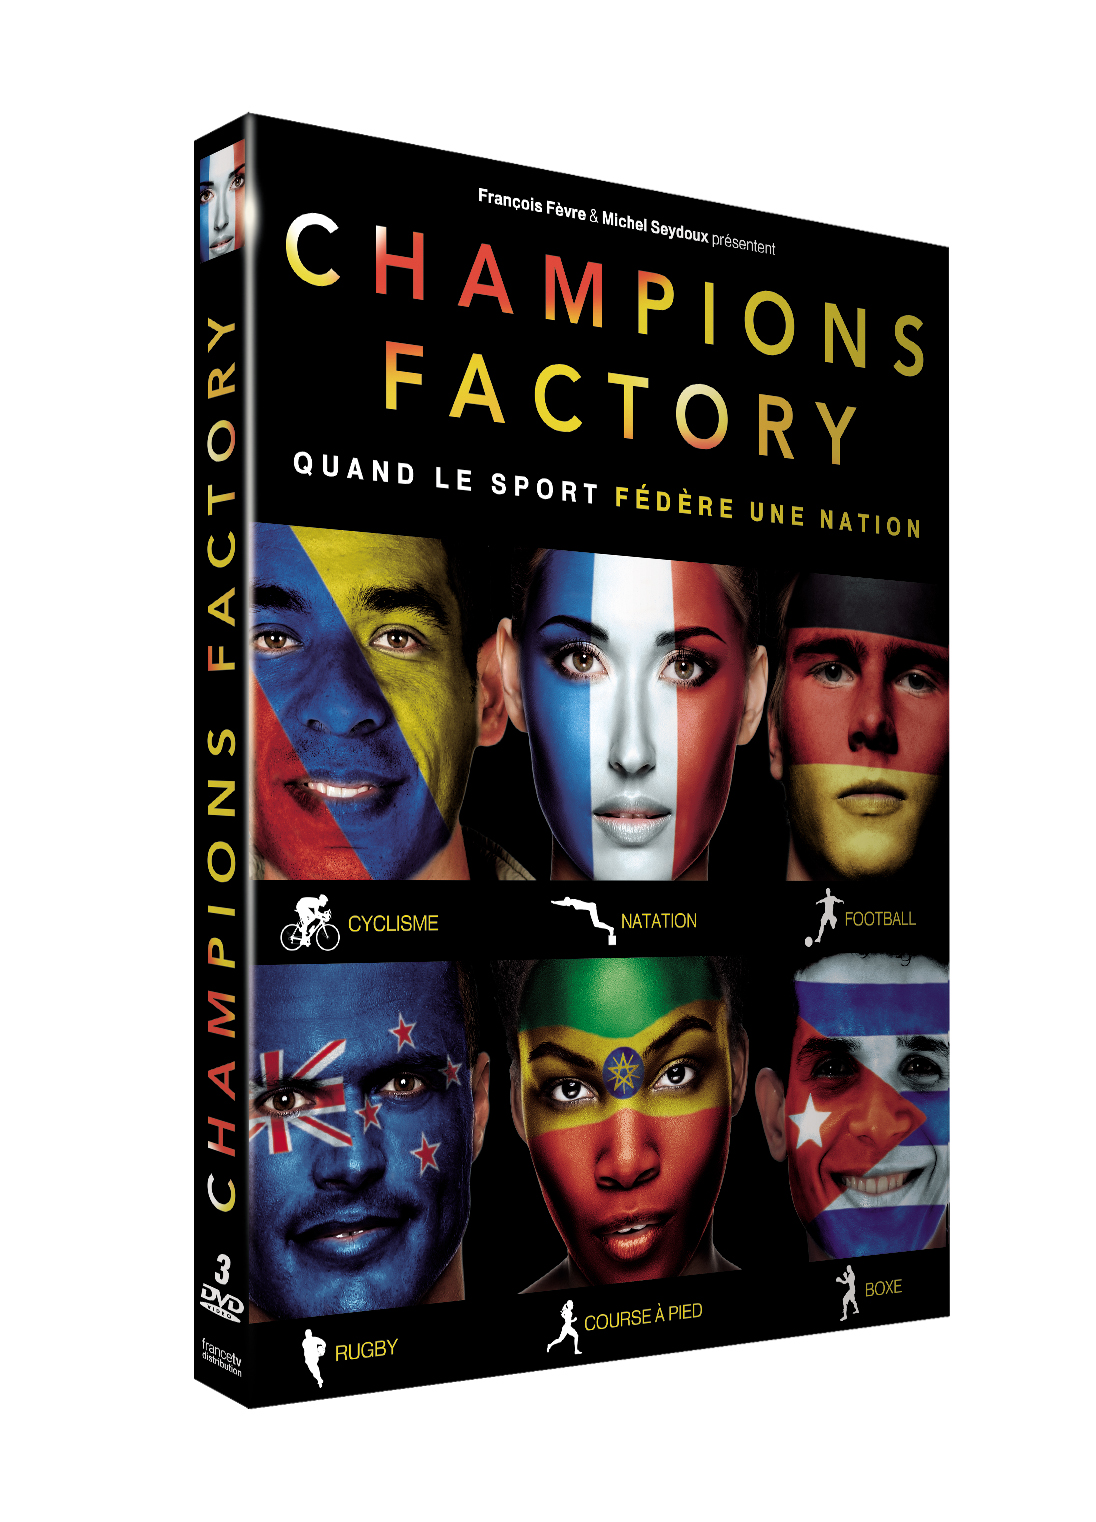 Champions Factory